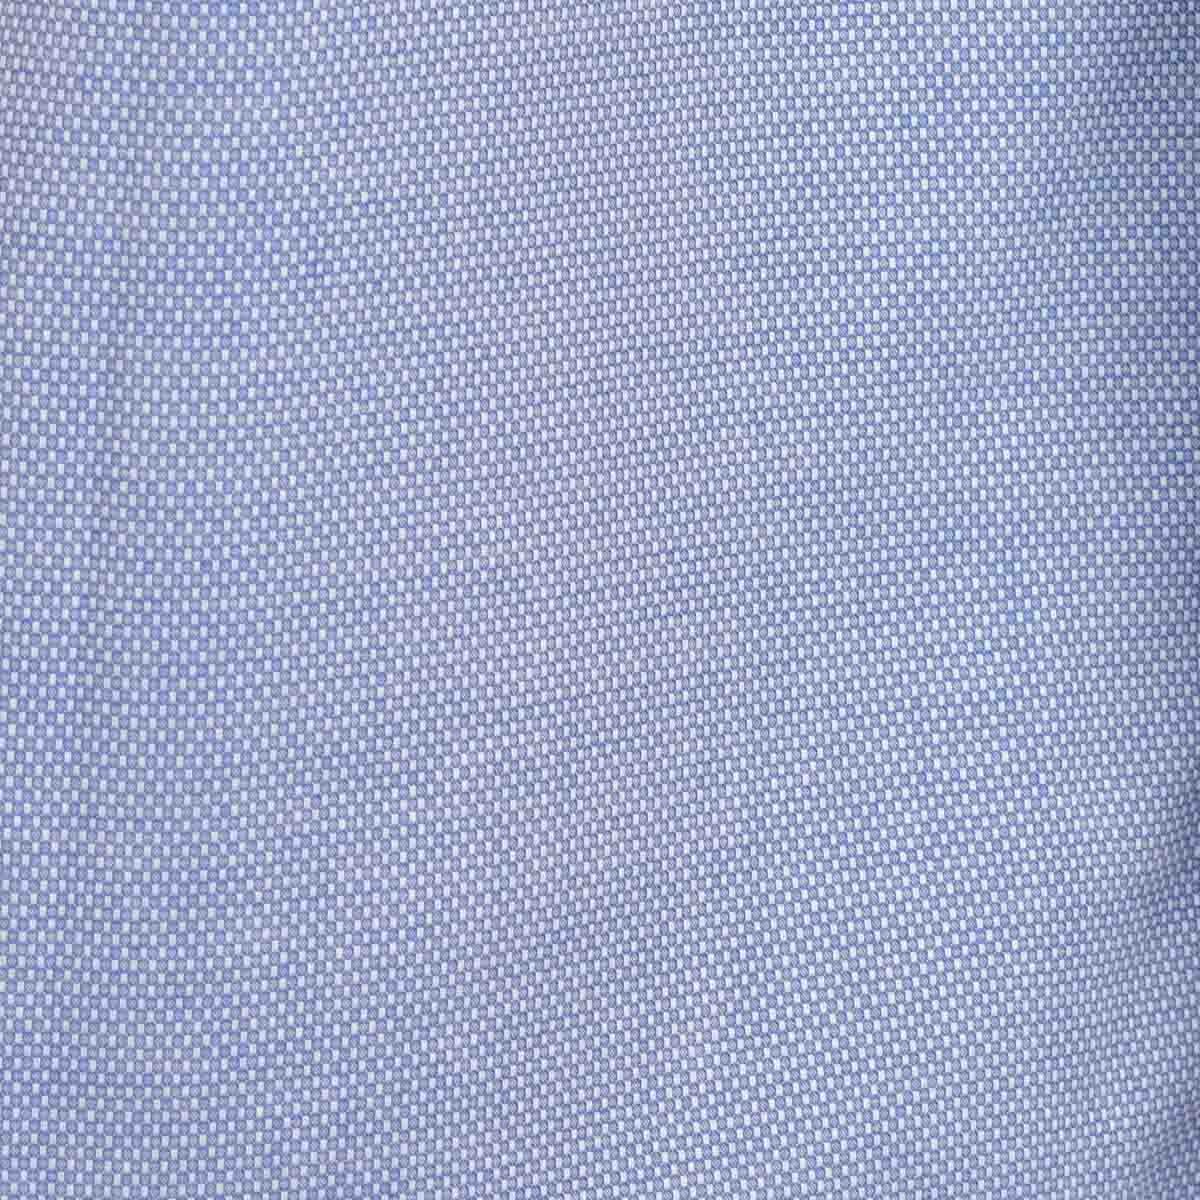 Camisa de Vestir Regular  Azul Combinado Nina Ricci para Caballero